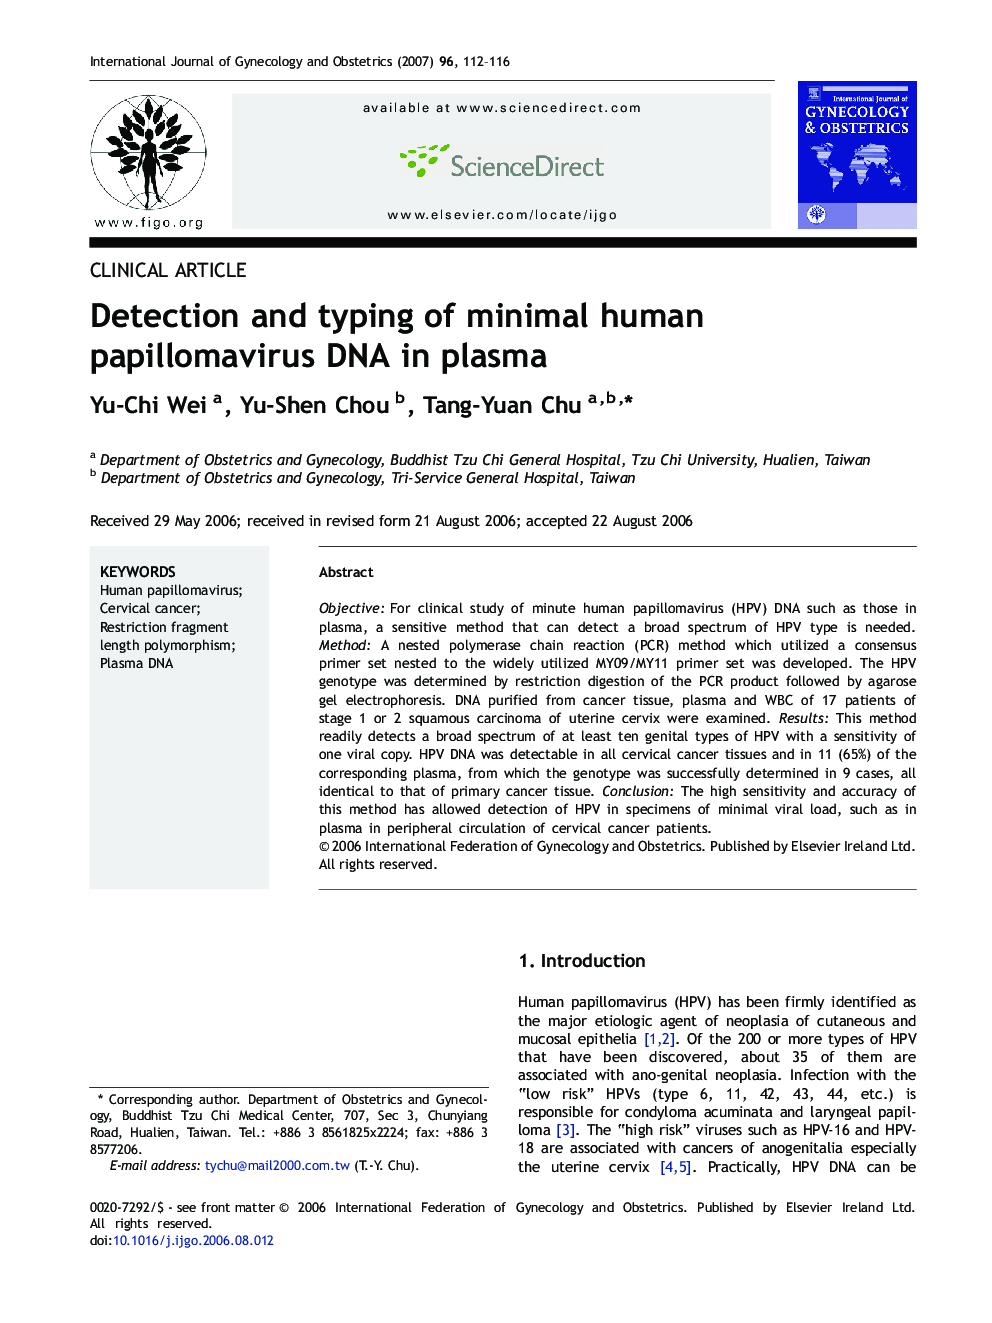 Detection and typing of minimal human papillomavirus DNA in plasma